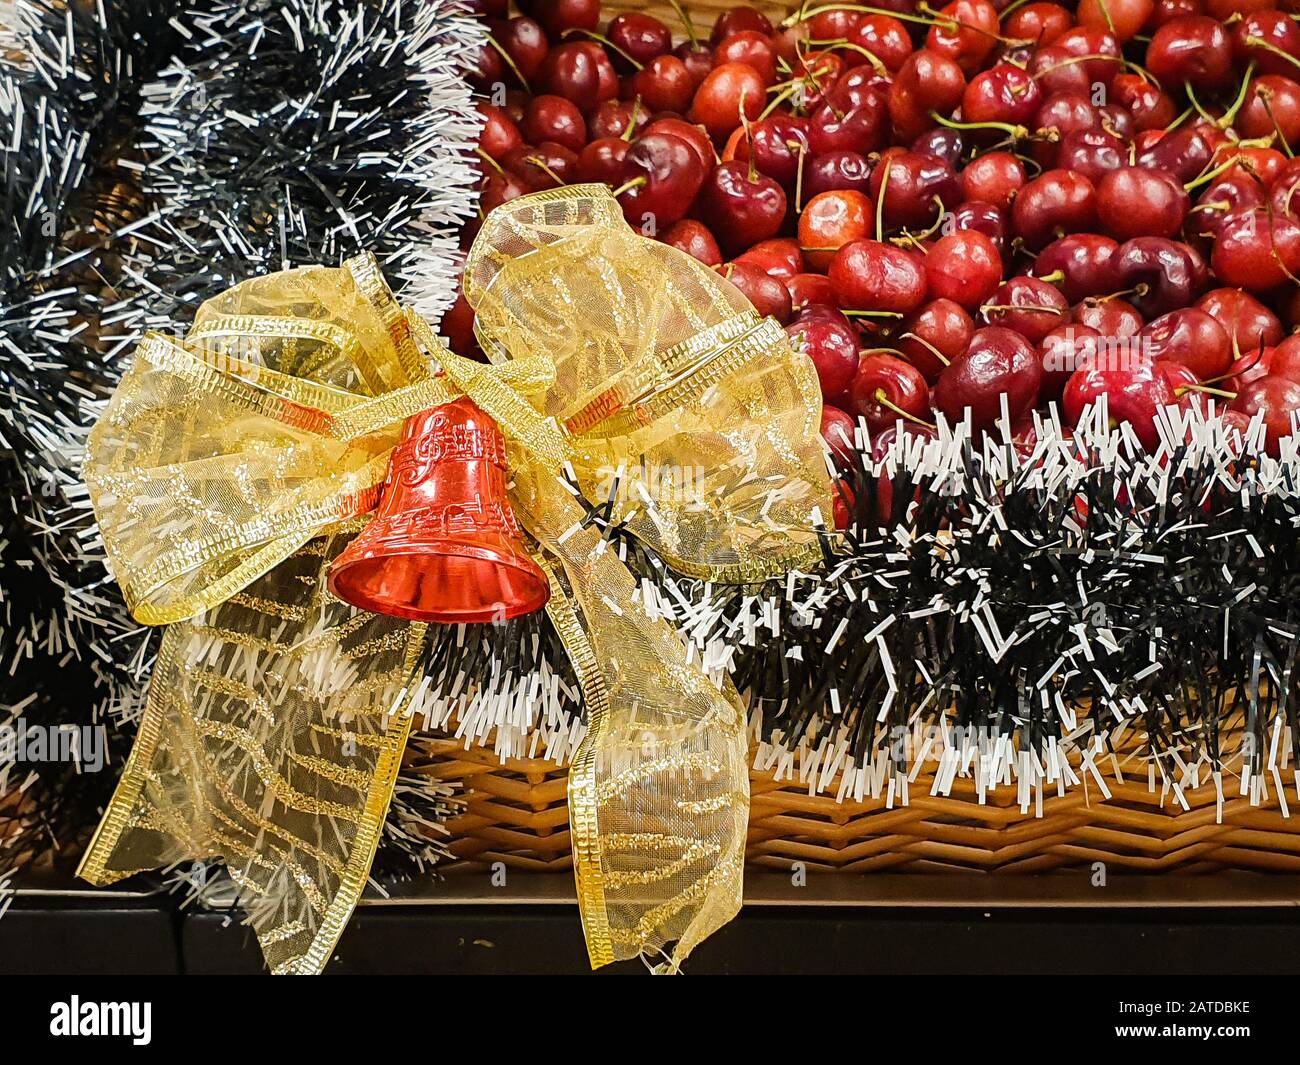 Fresh cherries in a Christmas basket Stock Photo